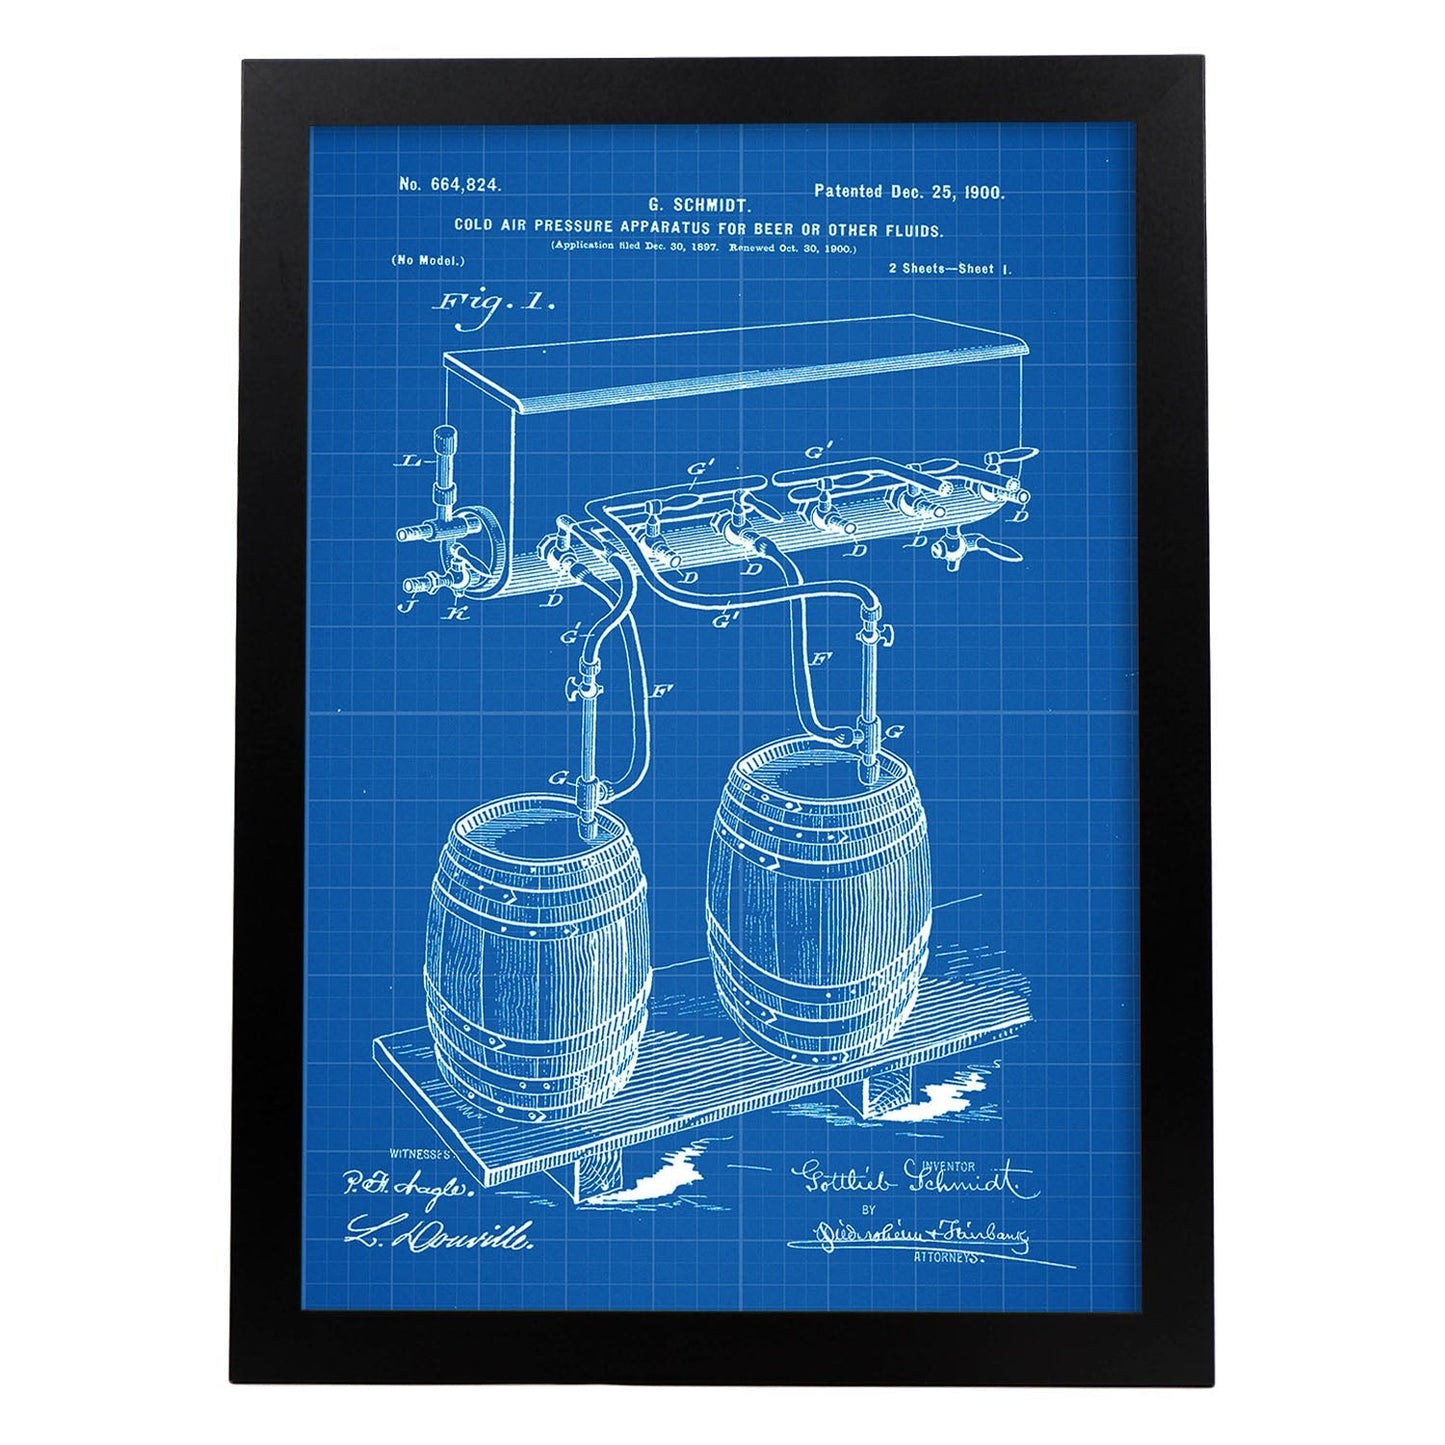 Poster con patente de Presion cerveza. Lámina con diseño de patente antigua-Artwork-Nacnic-A4-Marco Negro-Nacnic Estudio SL